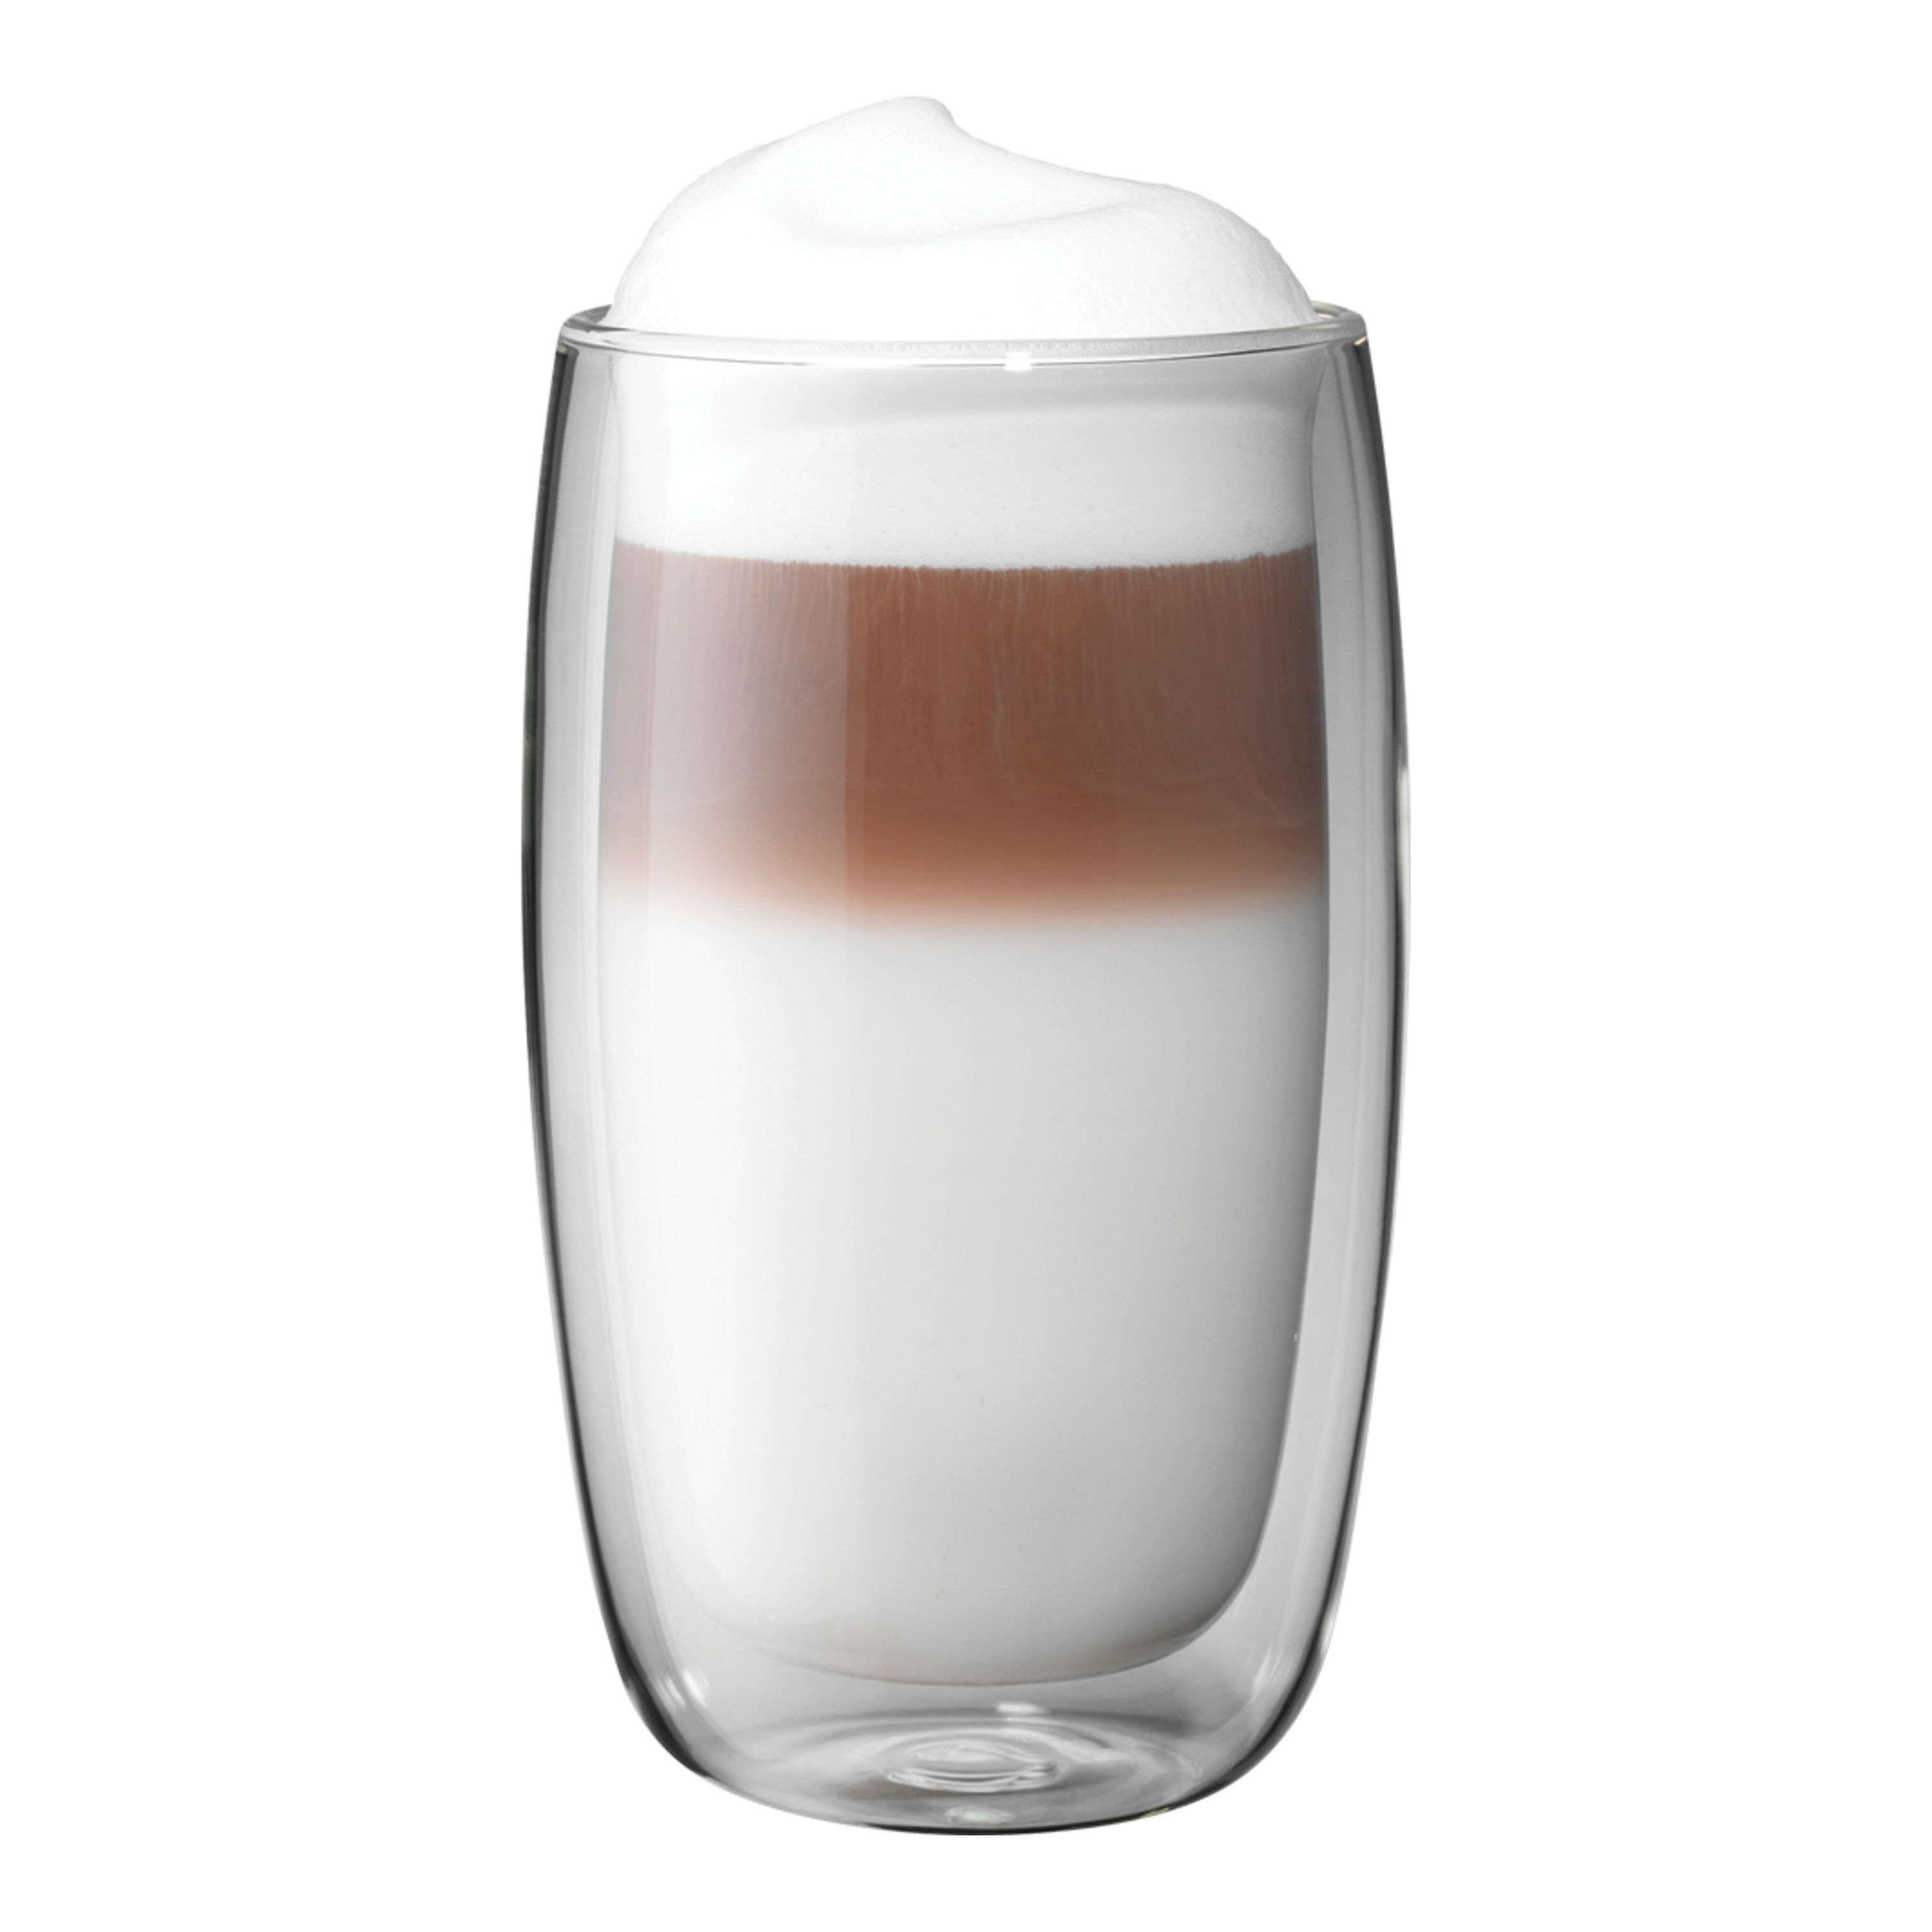 Buy ZWILLING Sorrento Double Wall Glassware Latte glass set